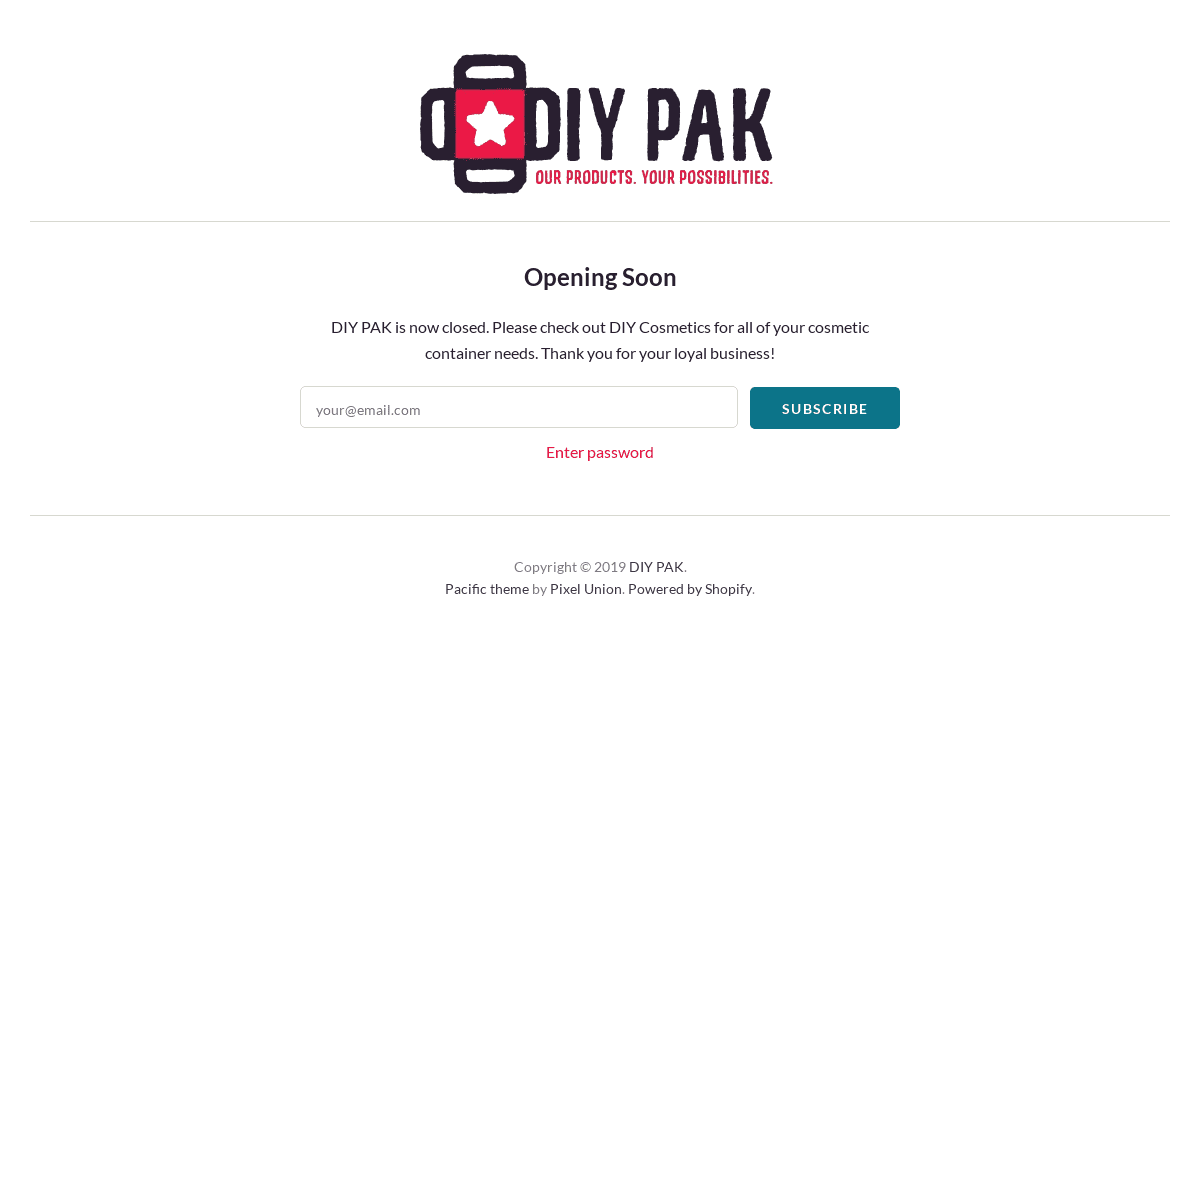 A complete backup of diypak.com